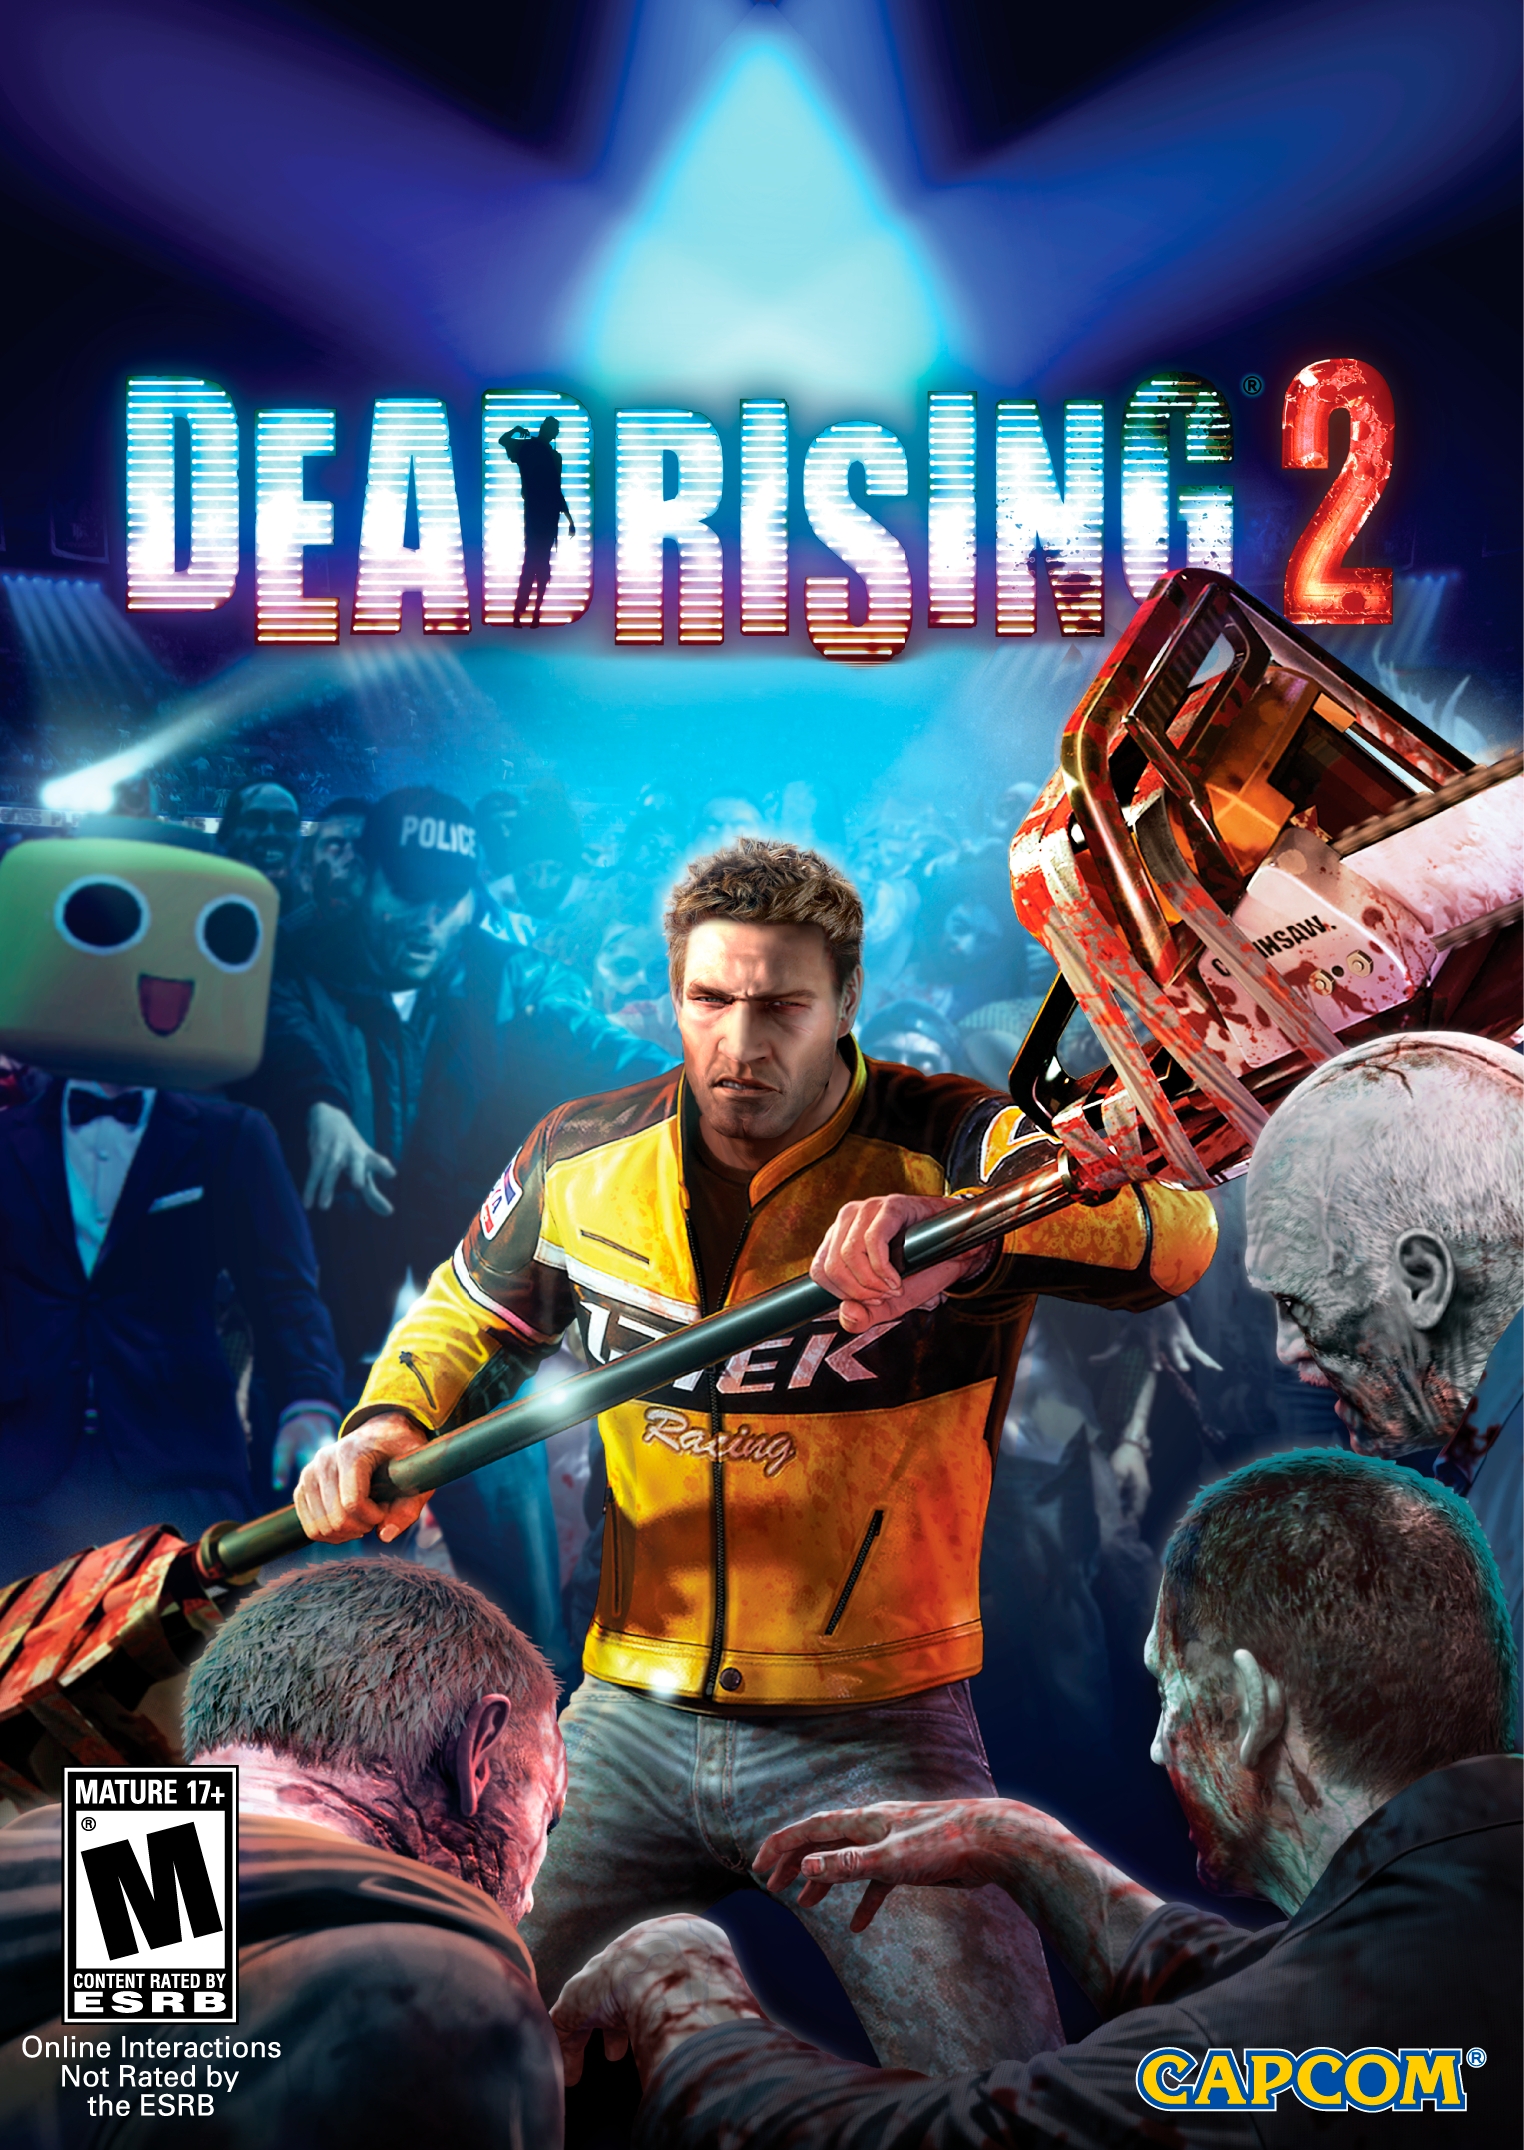 Dead Rising (Xbox 360) PEGI 18+ Adventure: Survival Horror Fast and FREE P  & P